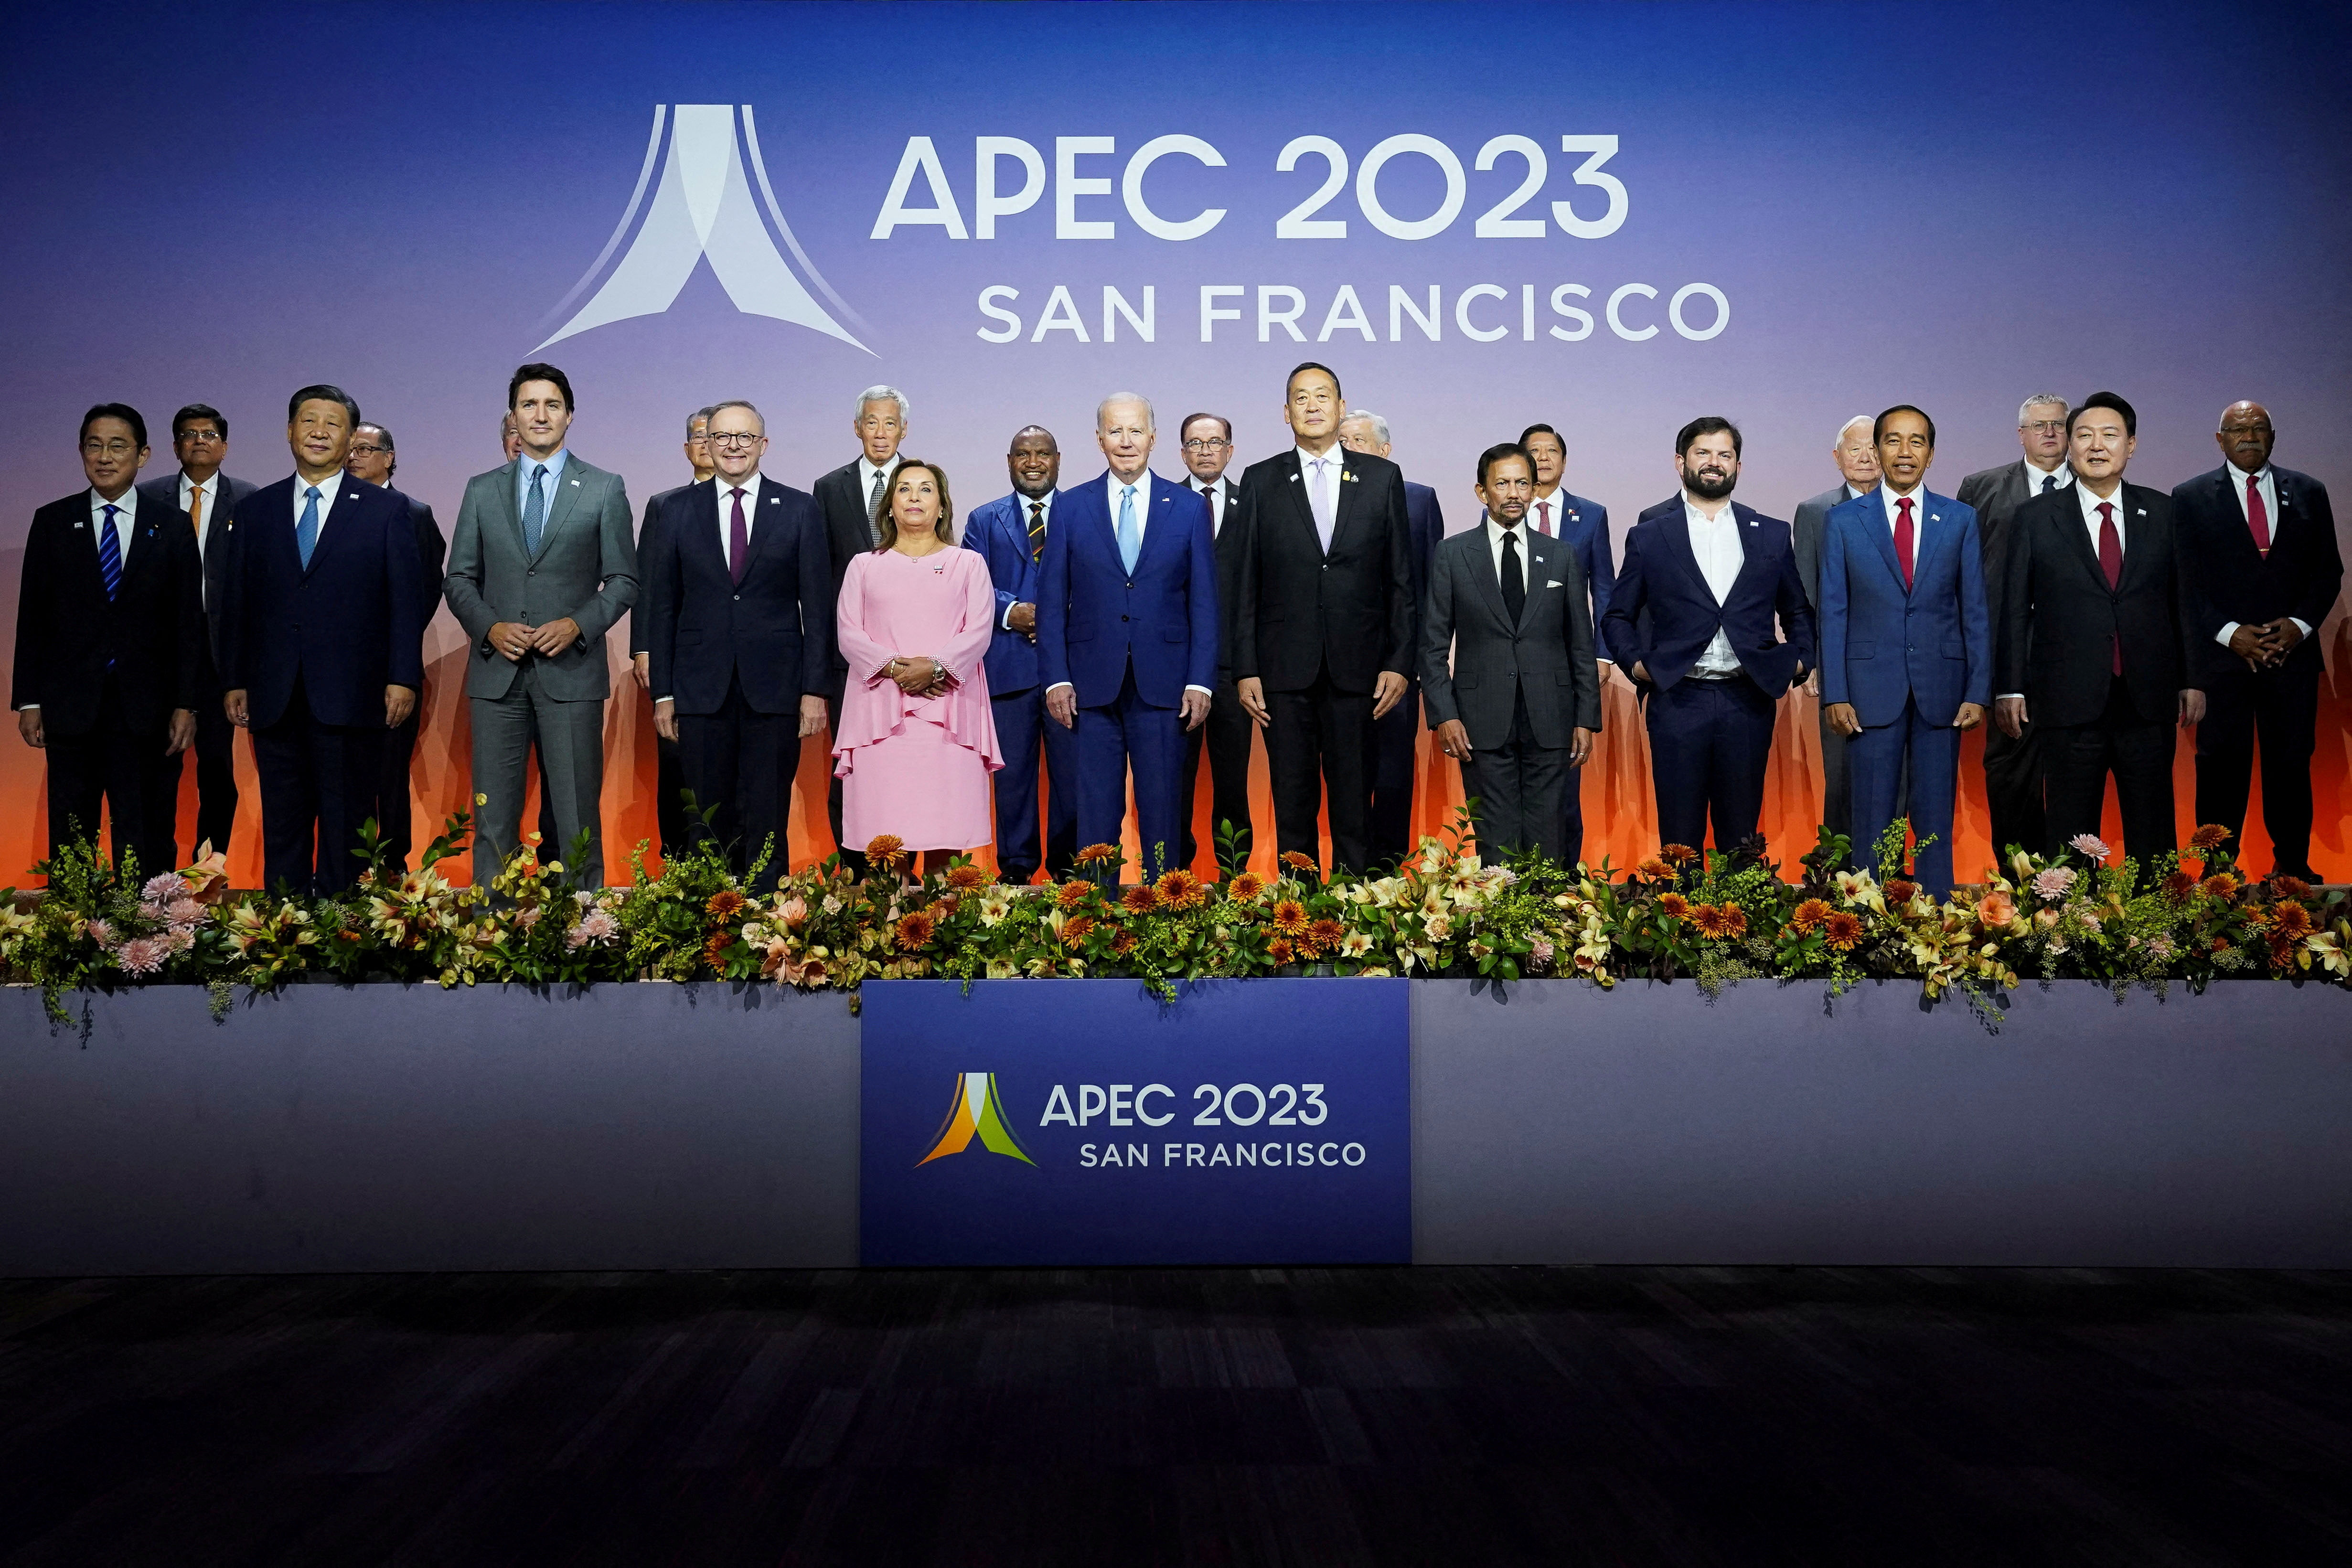 APEC峰會領袖代表大合照曝光 張忠謀習近平同框 ETtoday國際新聞 ETtoday新聞雲